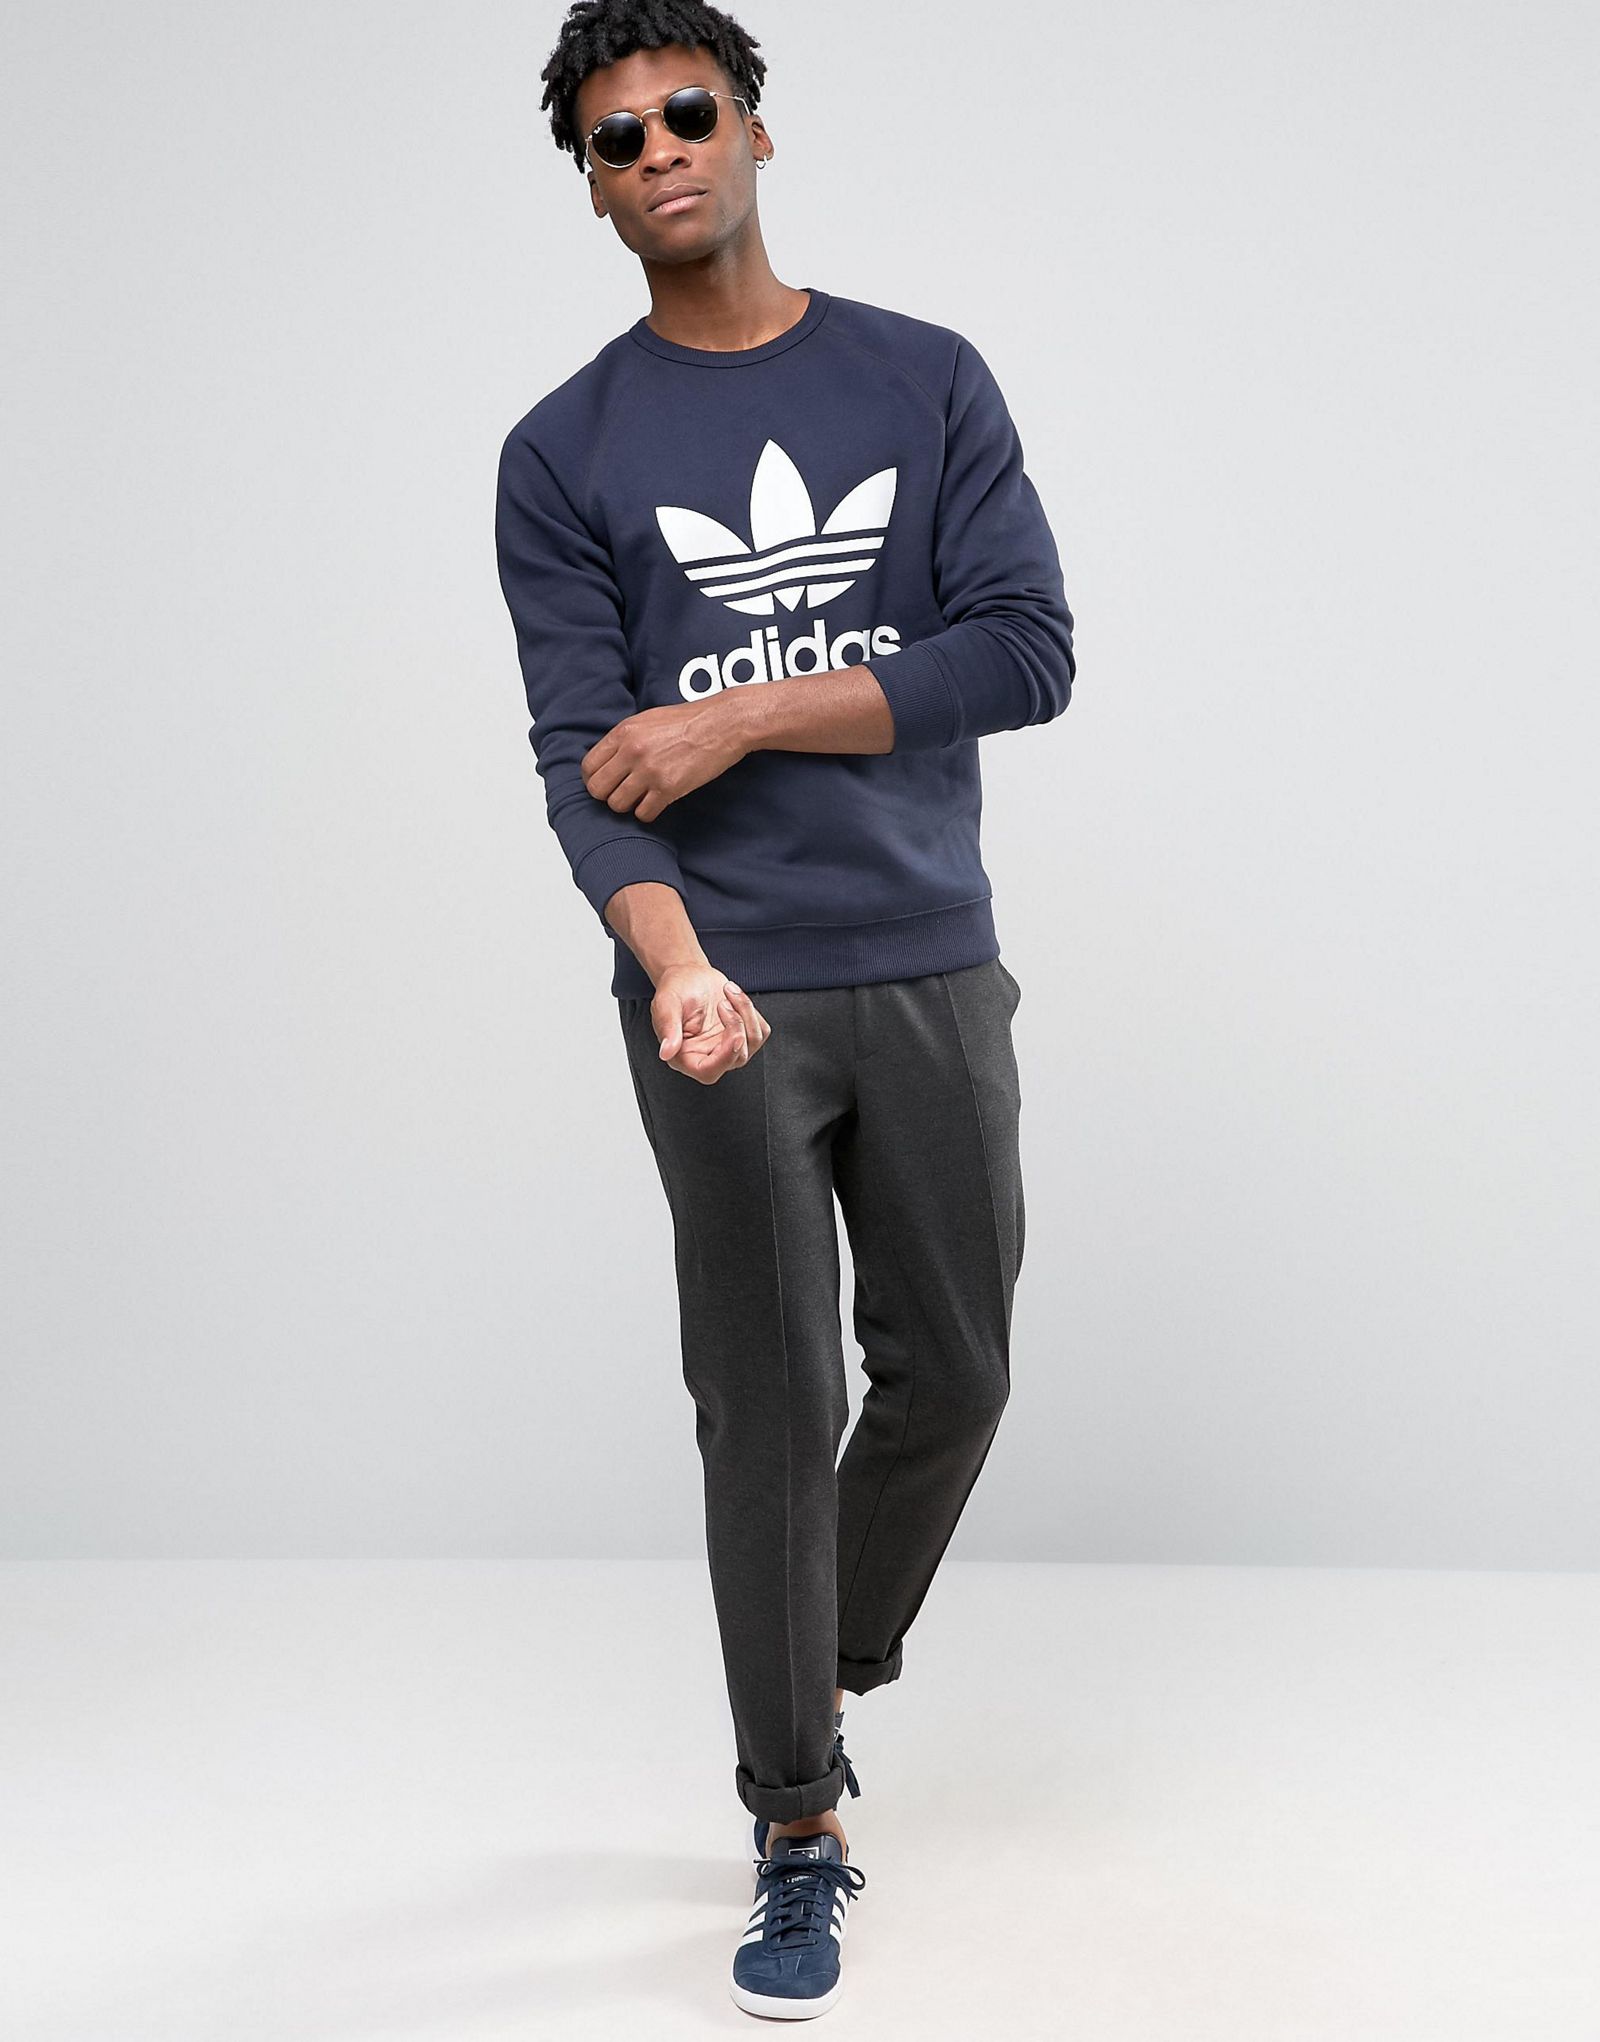 adidas Originals Trefoil Crew Sweatshirt AY7793